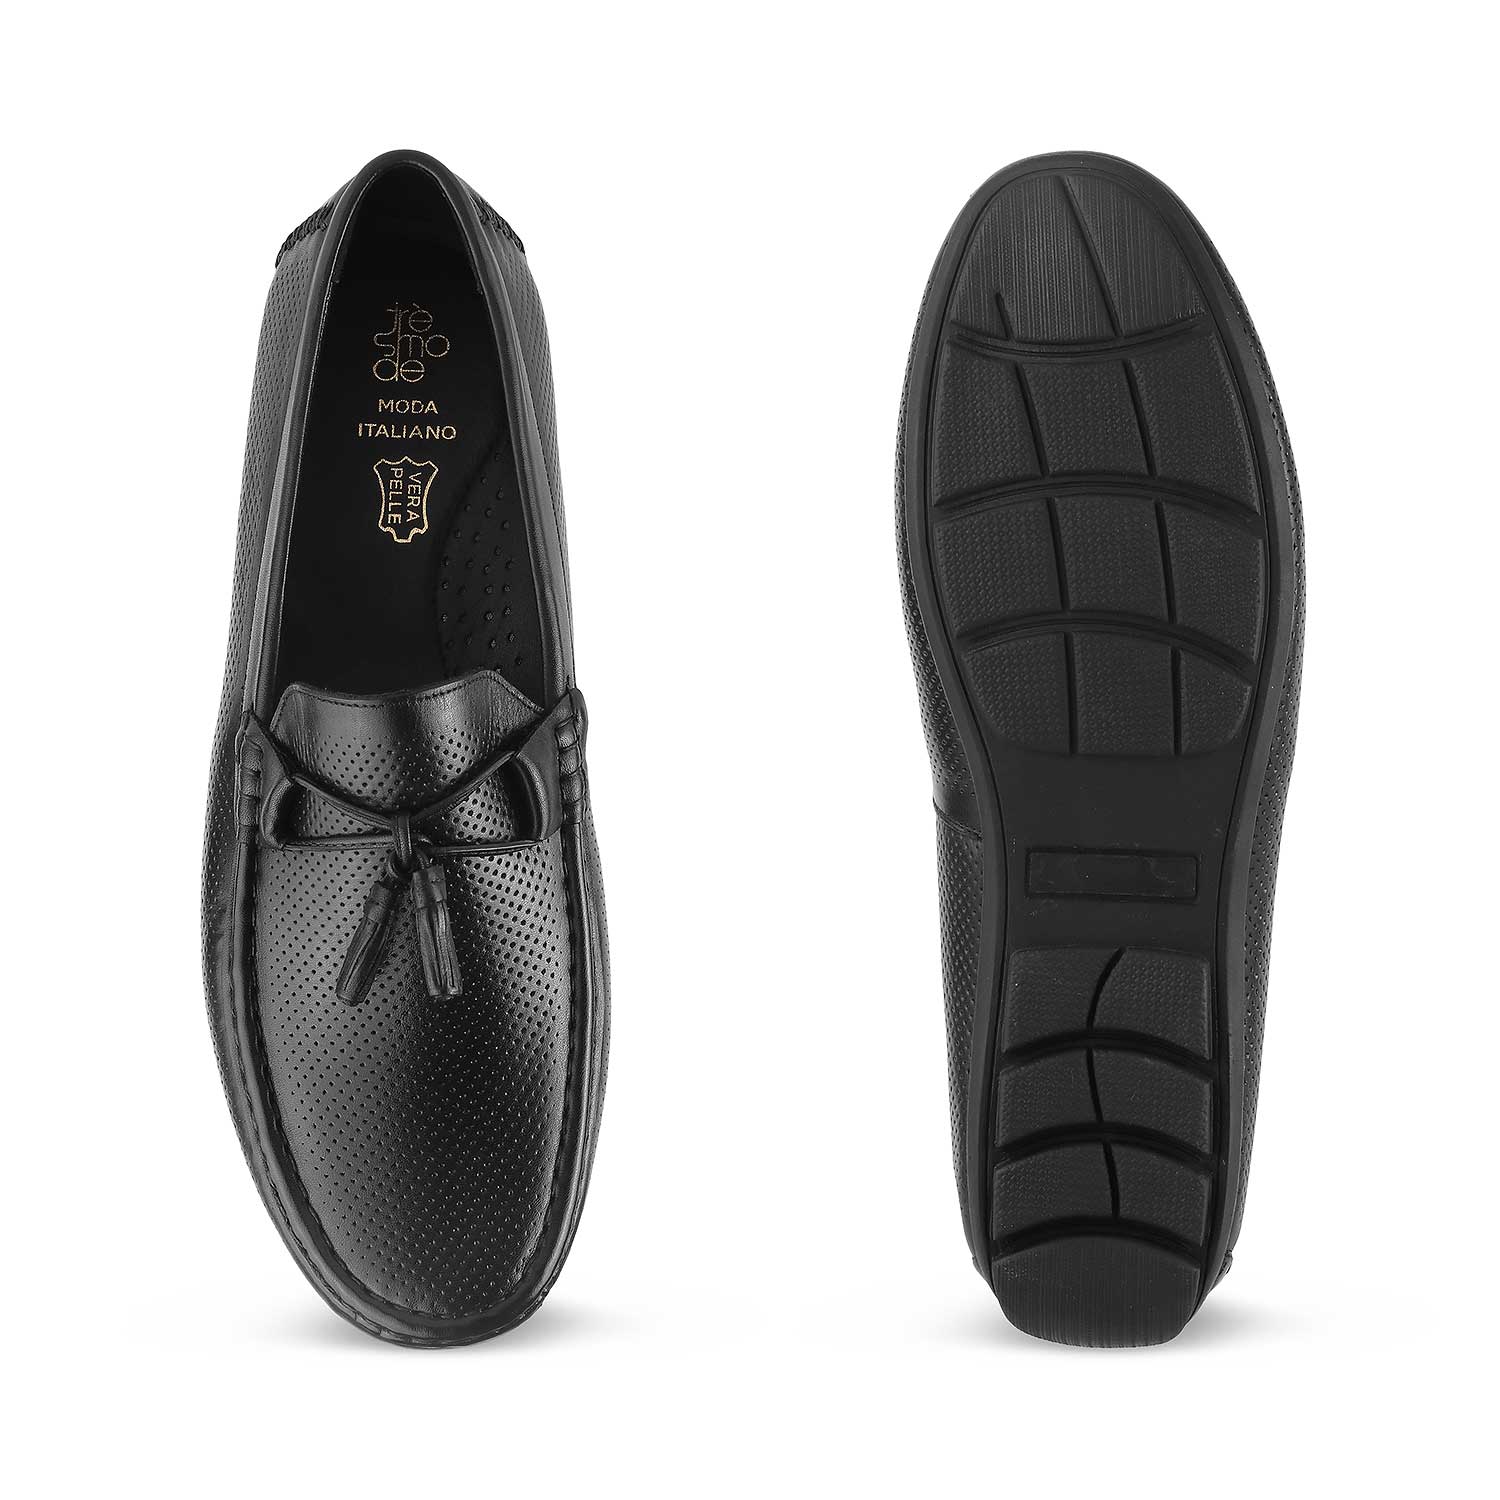 Otie Black Men's Leather Loafers Online at Tresmode.com